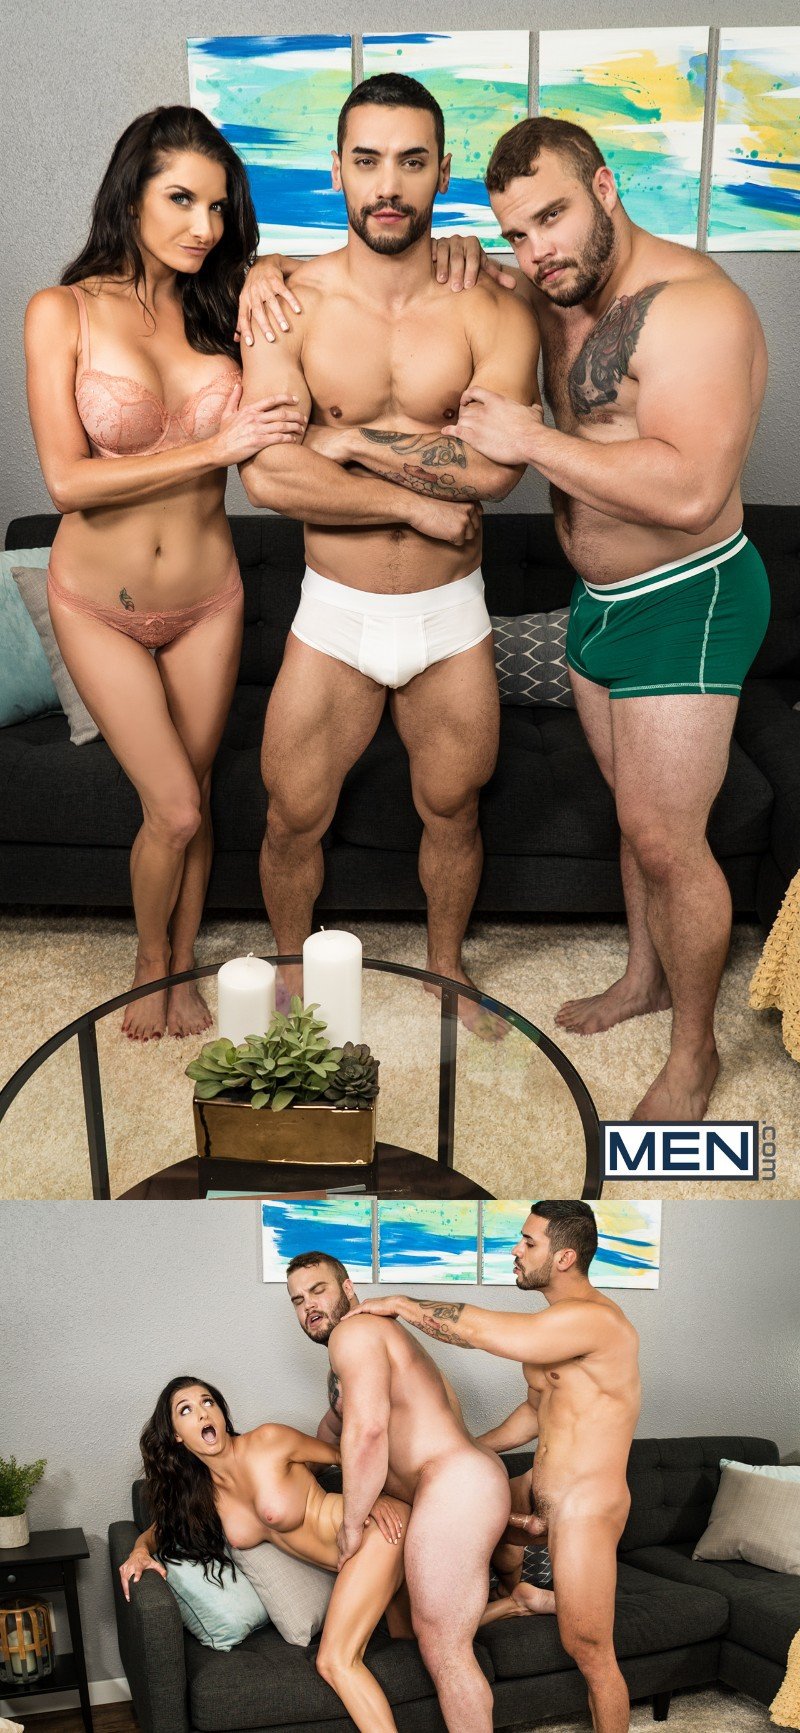 Bisexual Guy Hd - MEN.com Releases Its First Bisexual Scene & Members Hate It ...